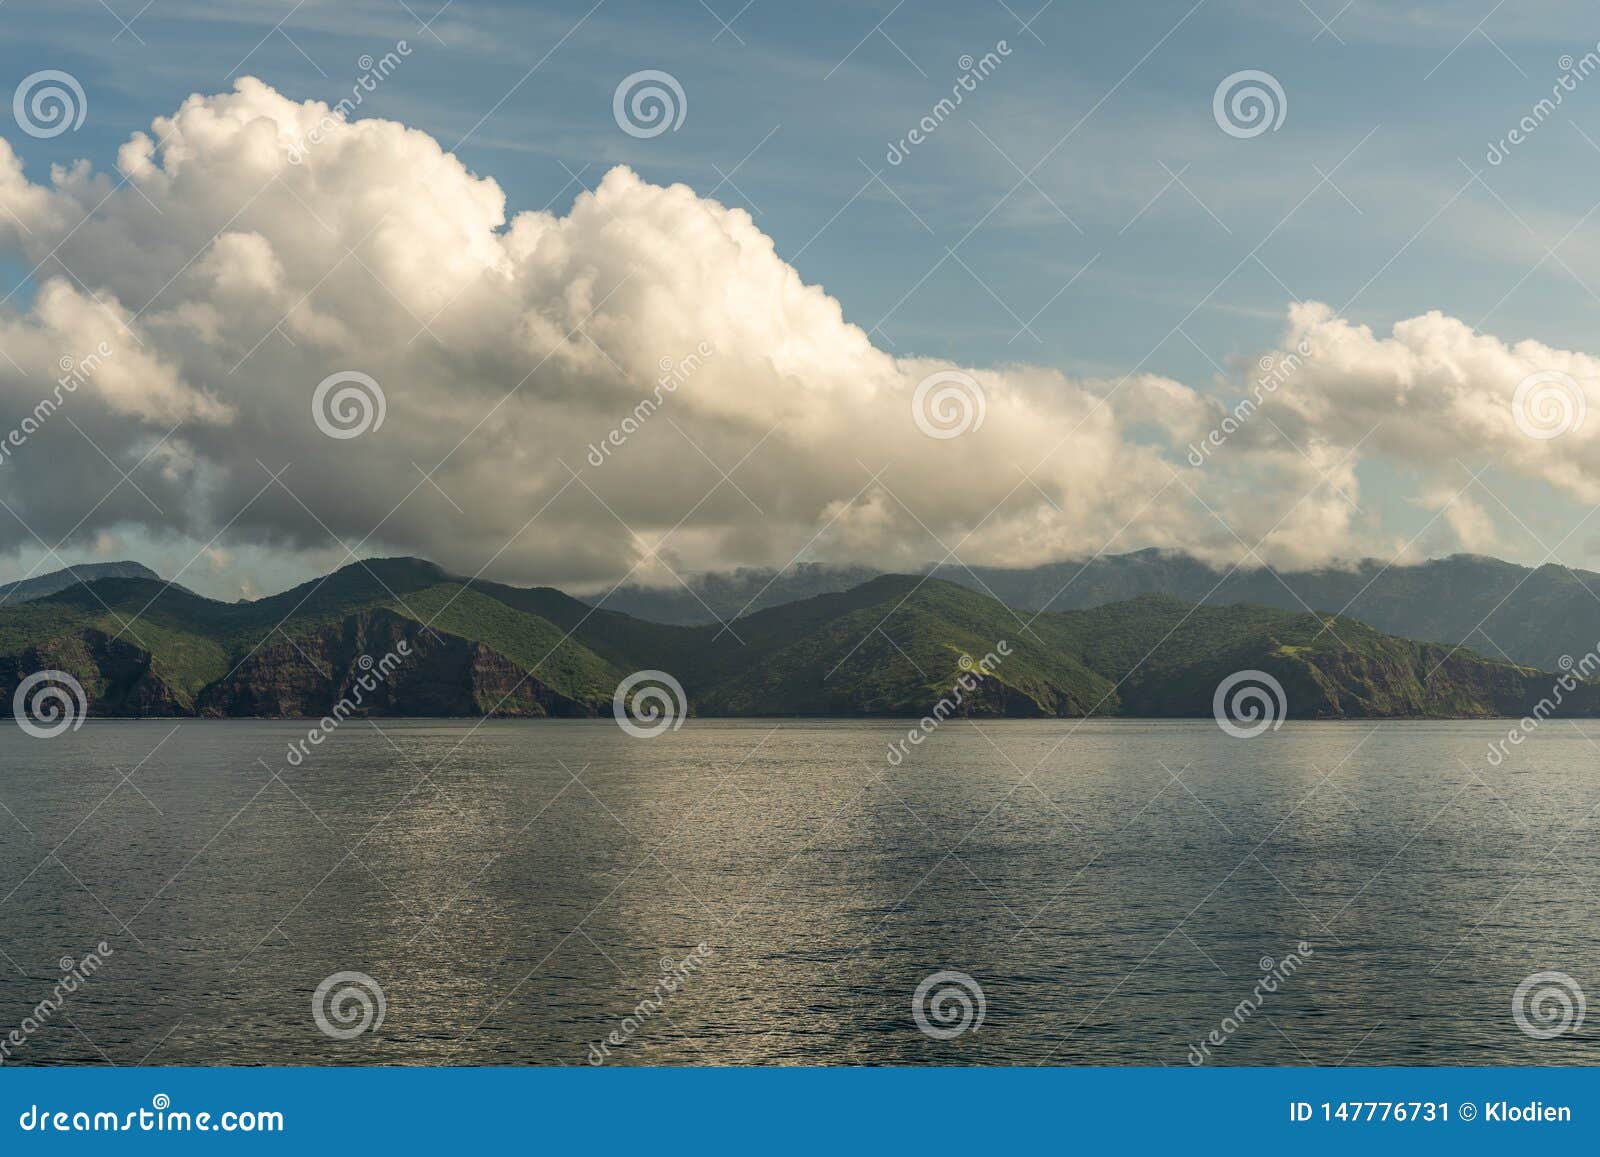 rinca island southside coast and cloudscape, indonesia